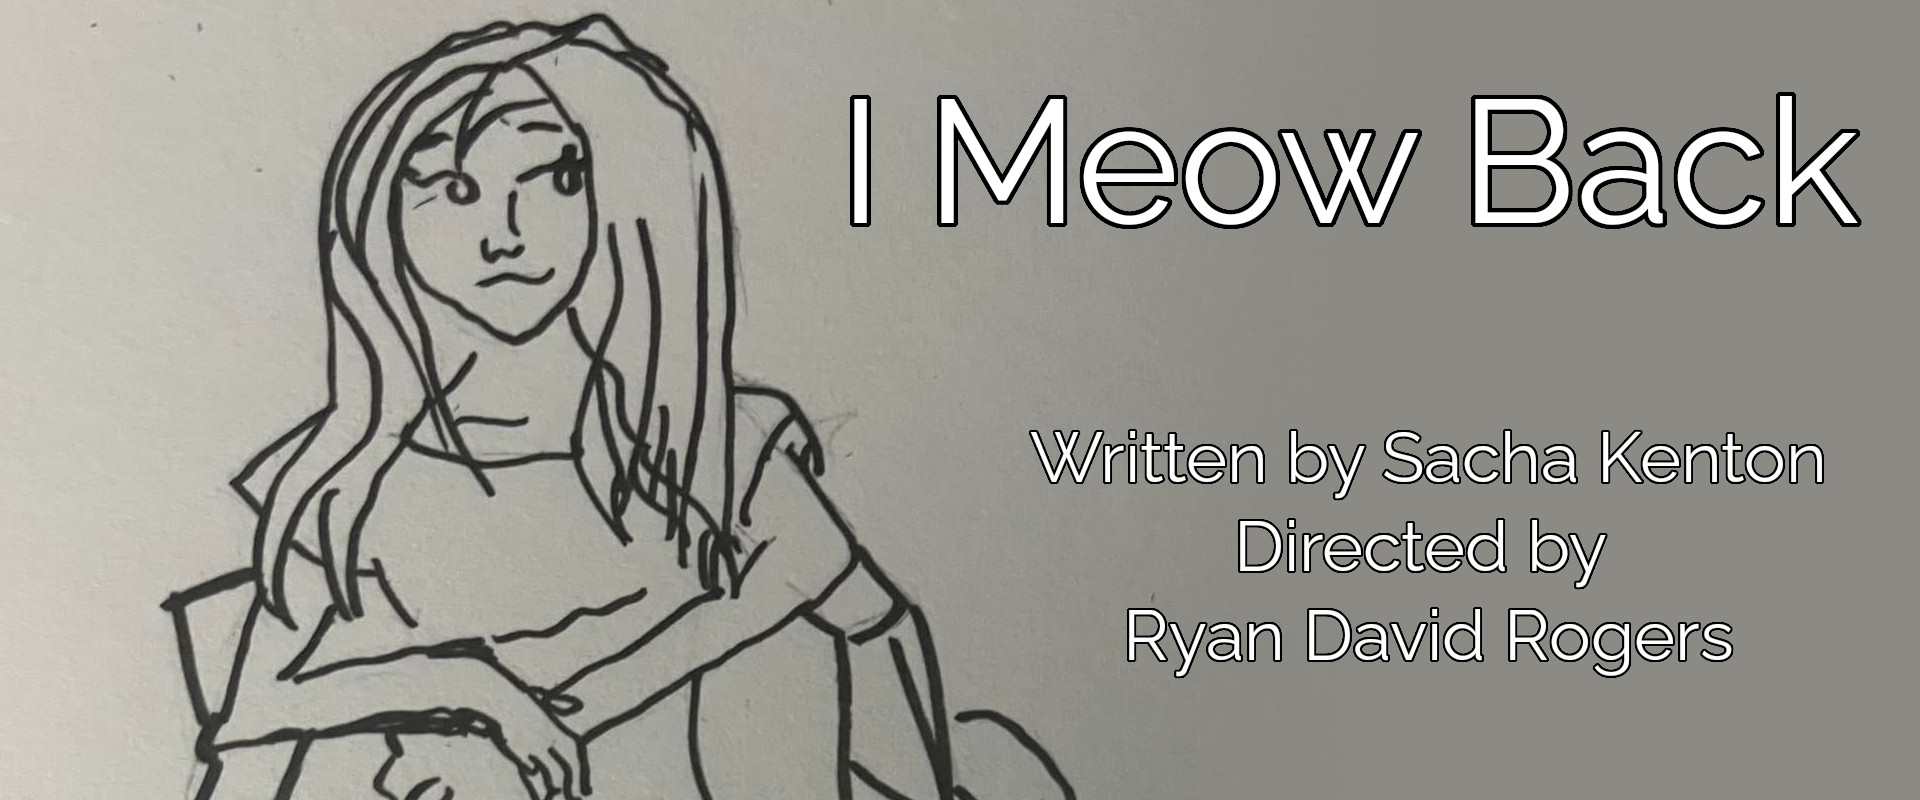 Concept art of the short film "I Meow Back" drawn by Sacha Kenton